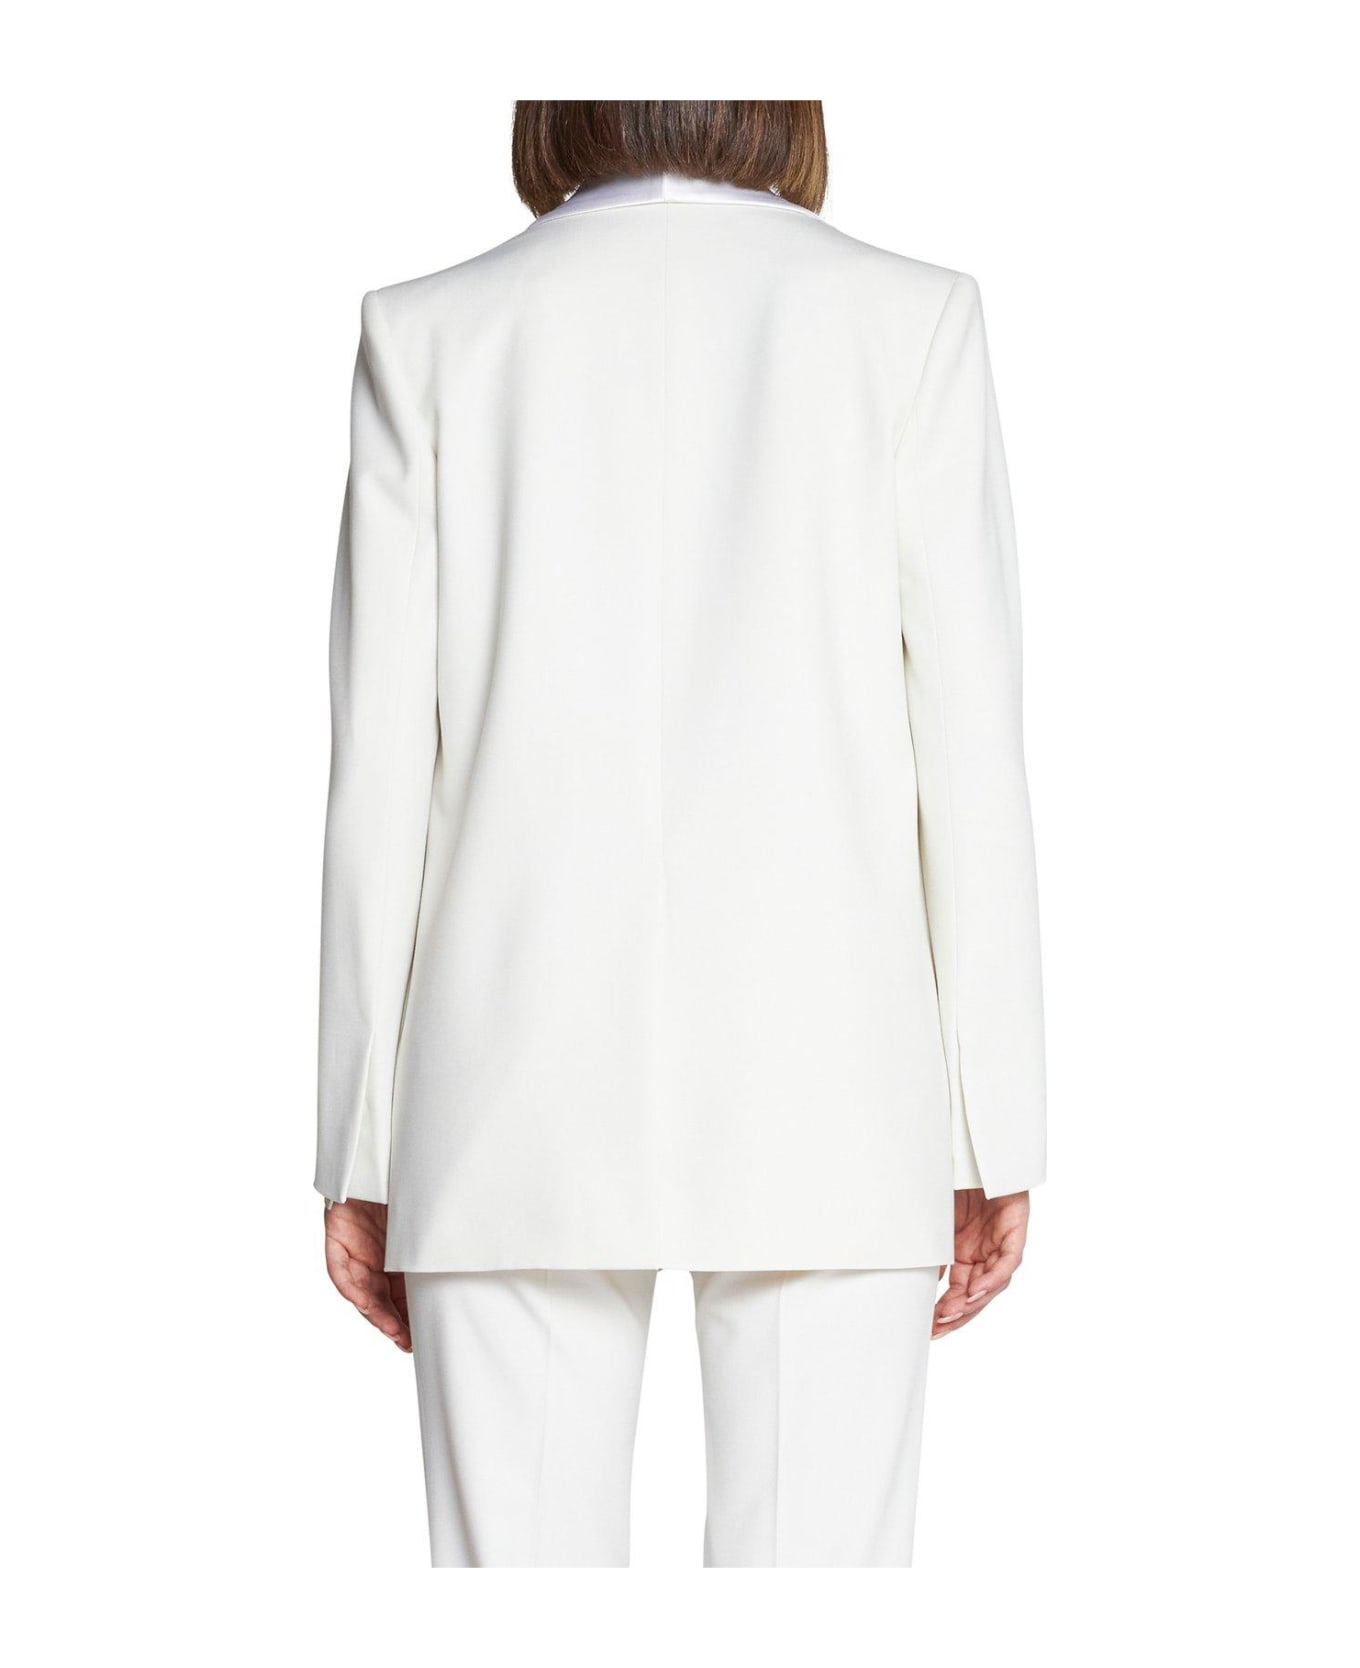 Stella McCartney Twill Tailored Dinner Jacket - White